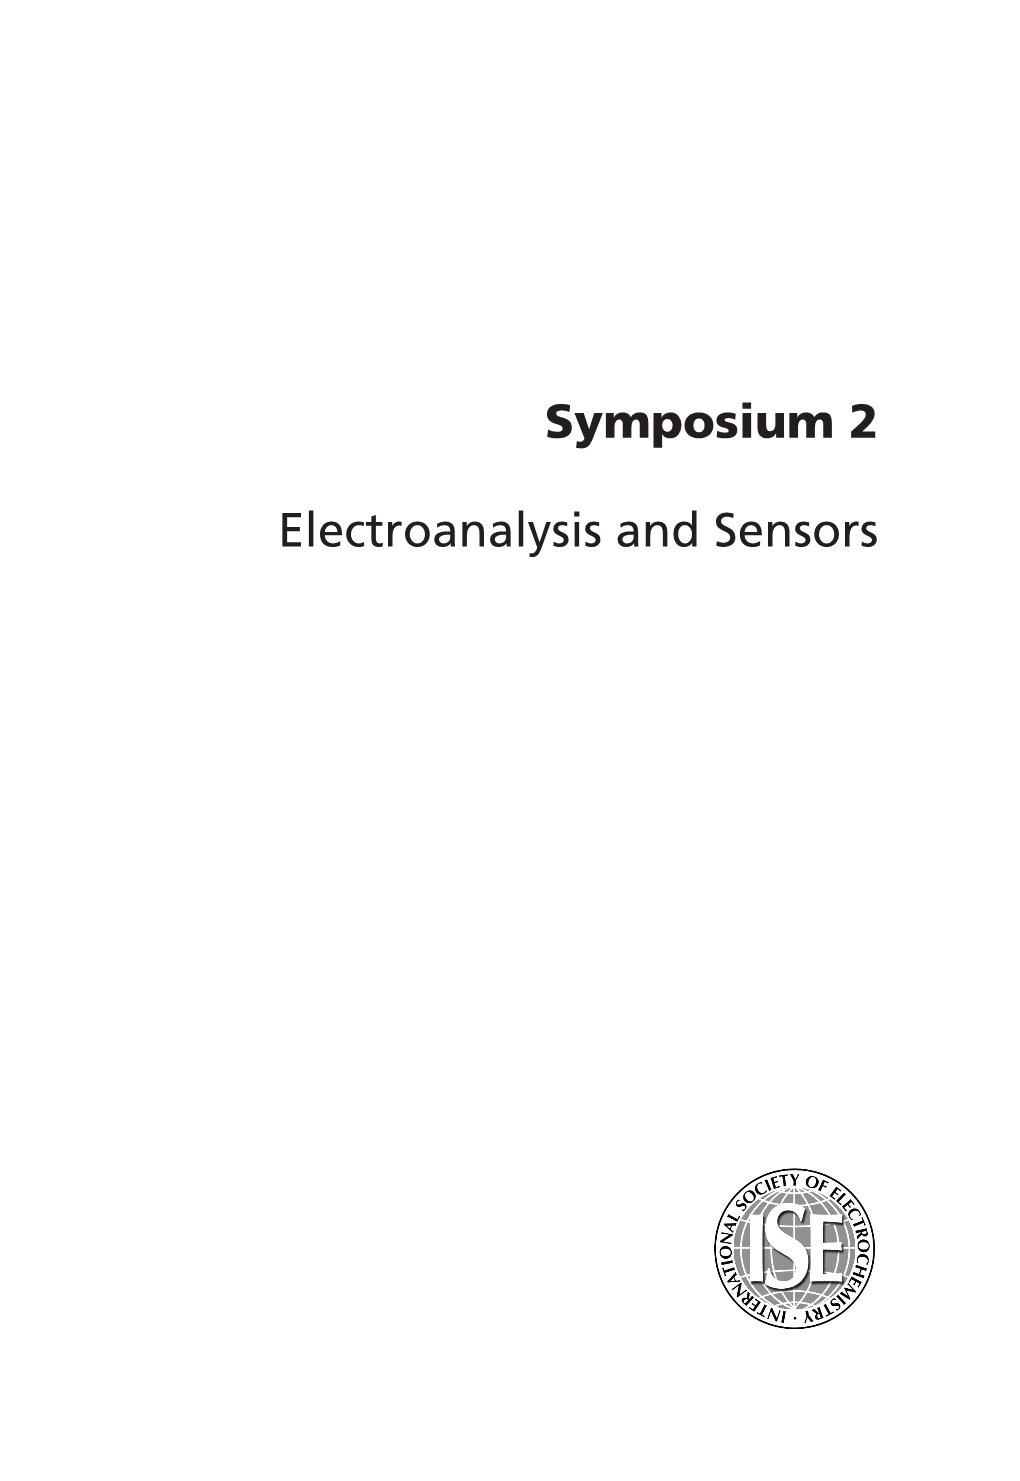 Symposium 2 Electroanalysis and Sensors